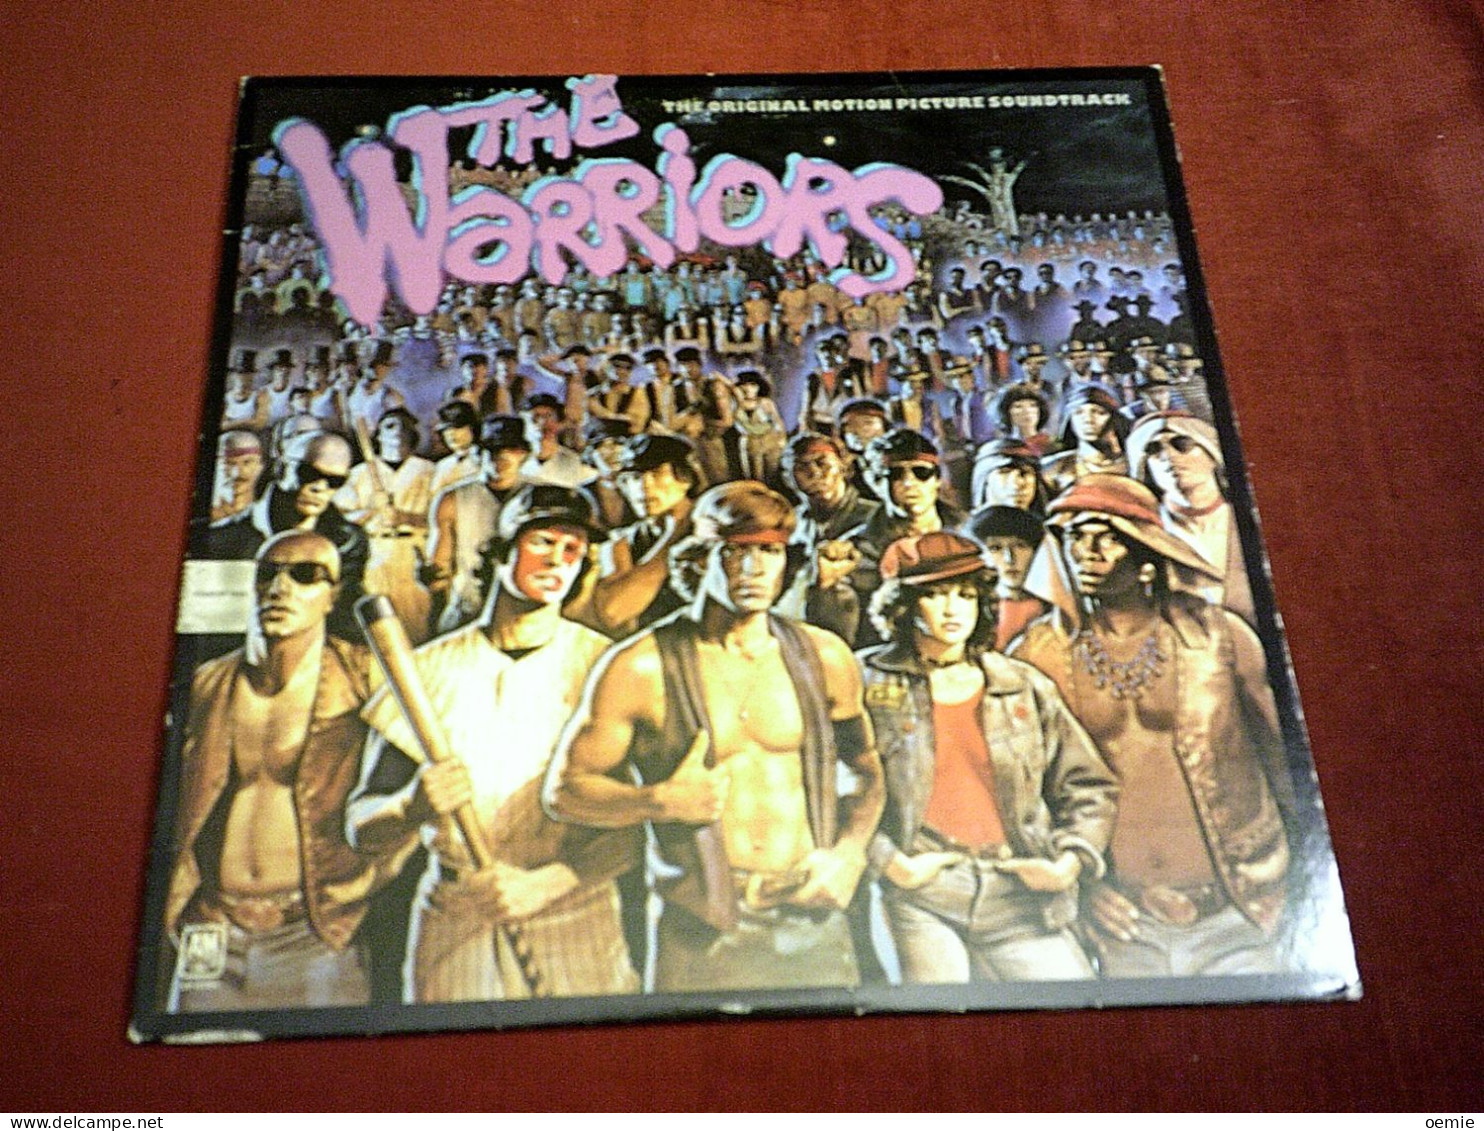 THE WARRIORS - Filmmuziek